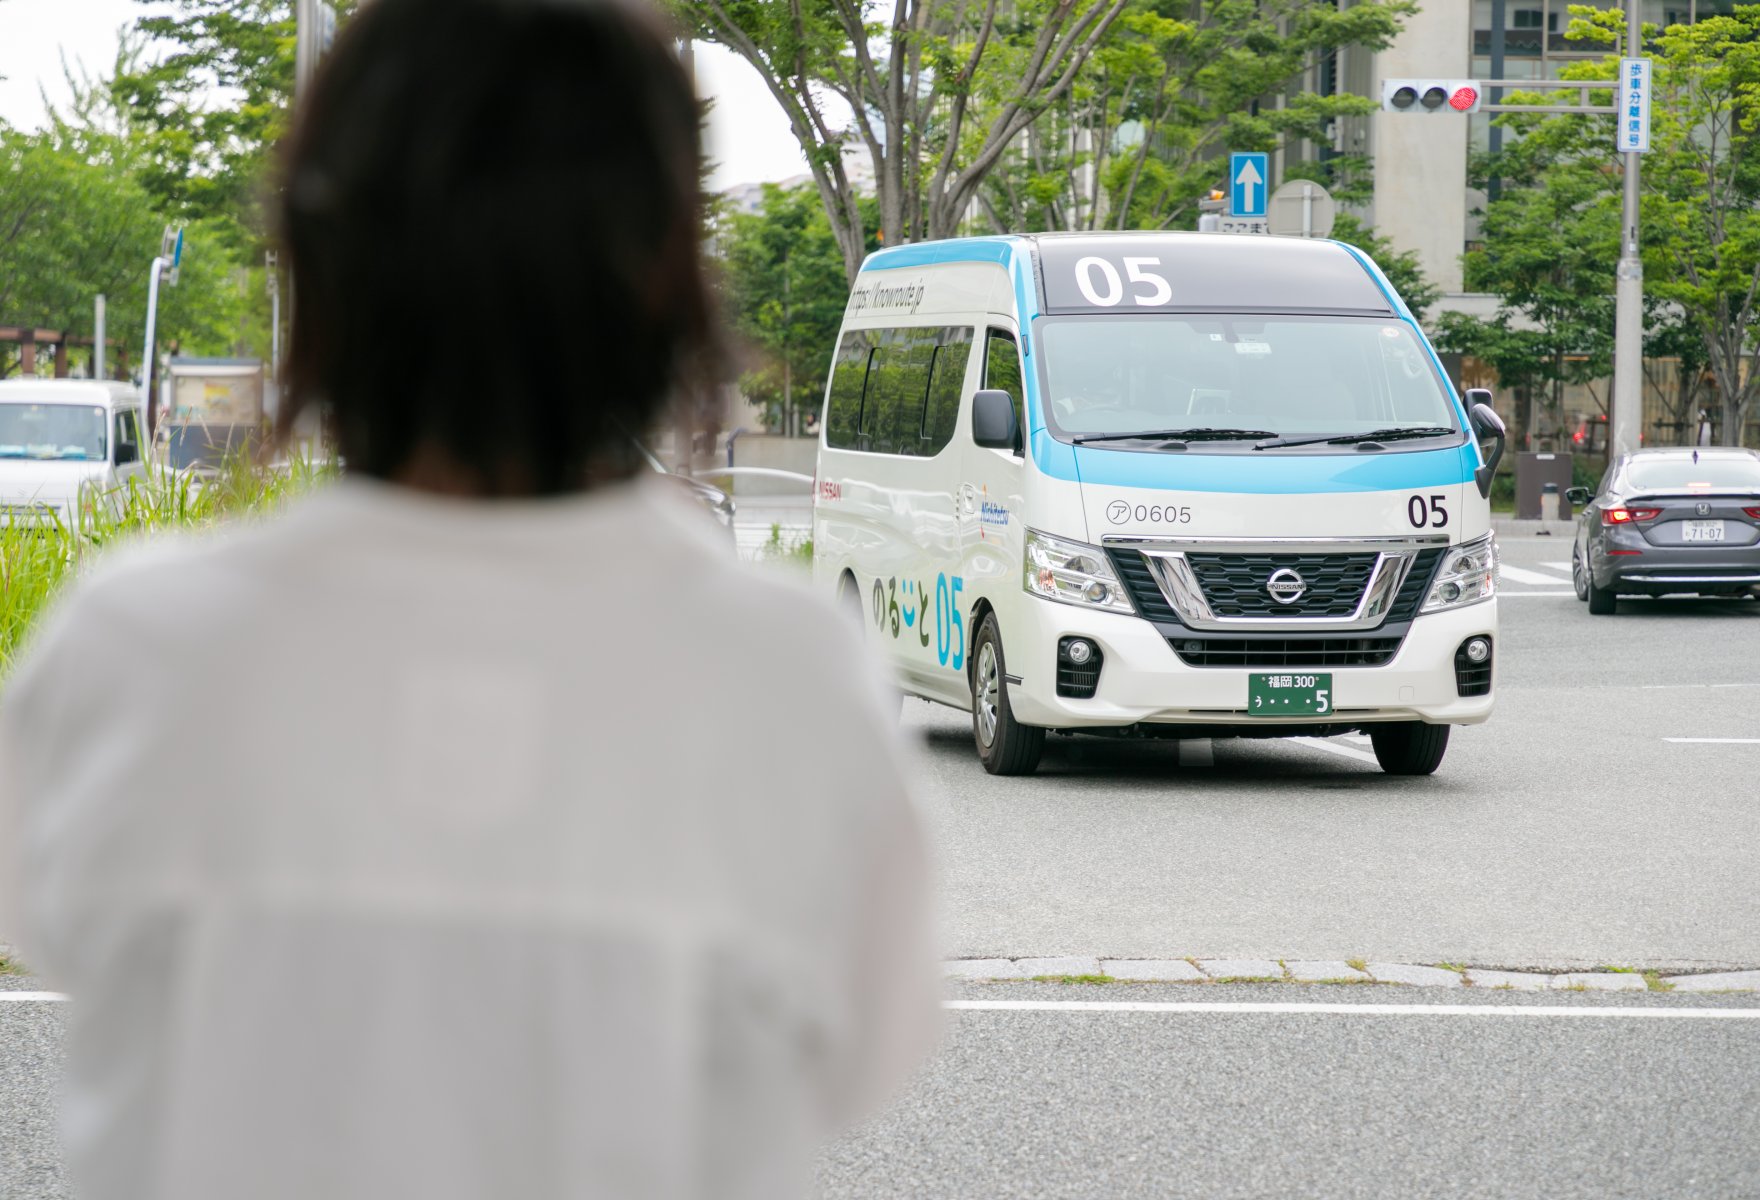 AI活用バスがもたらす変容する福岡の暮らし